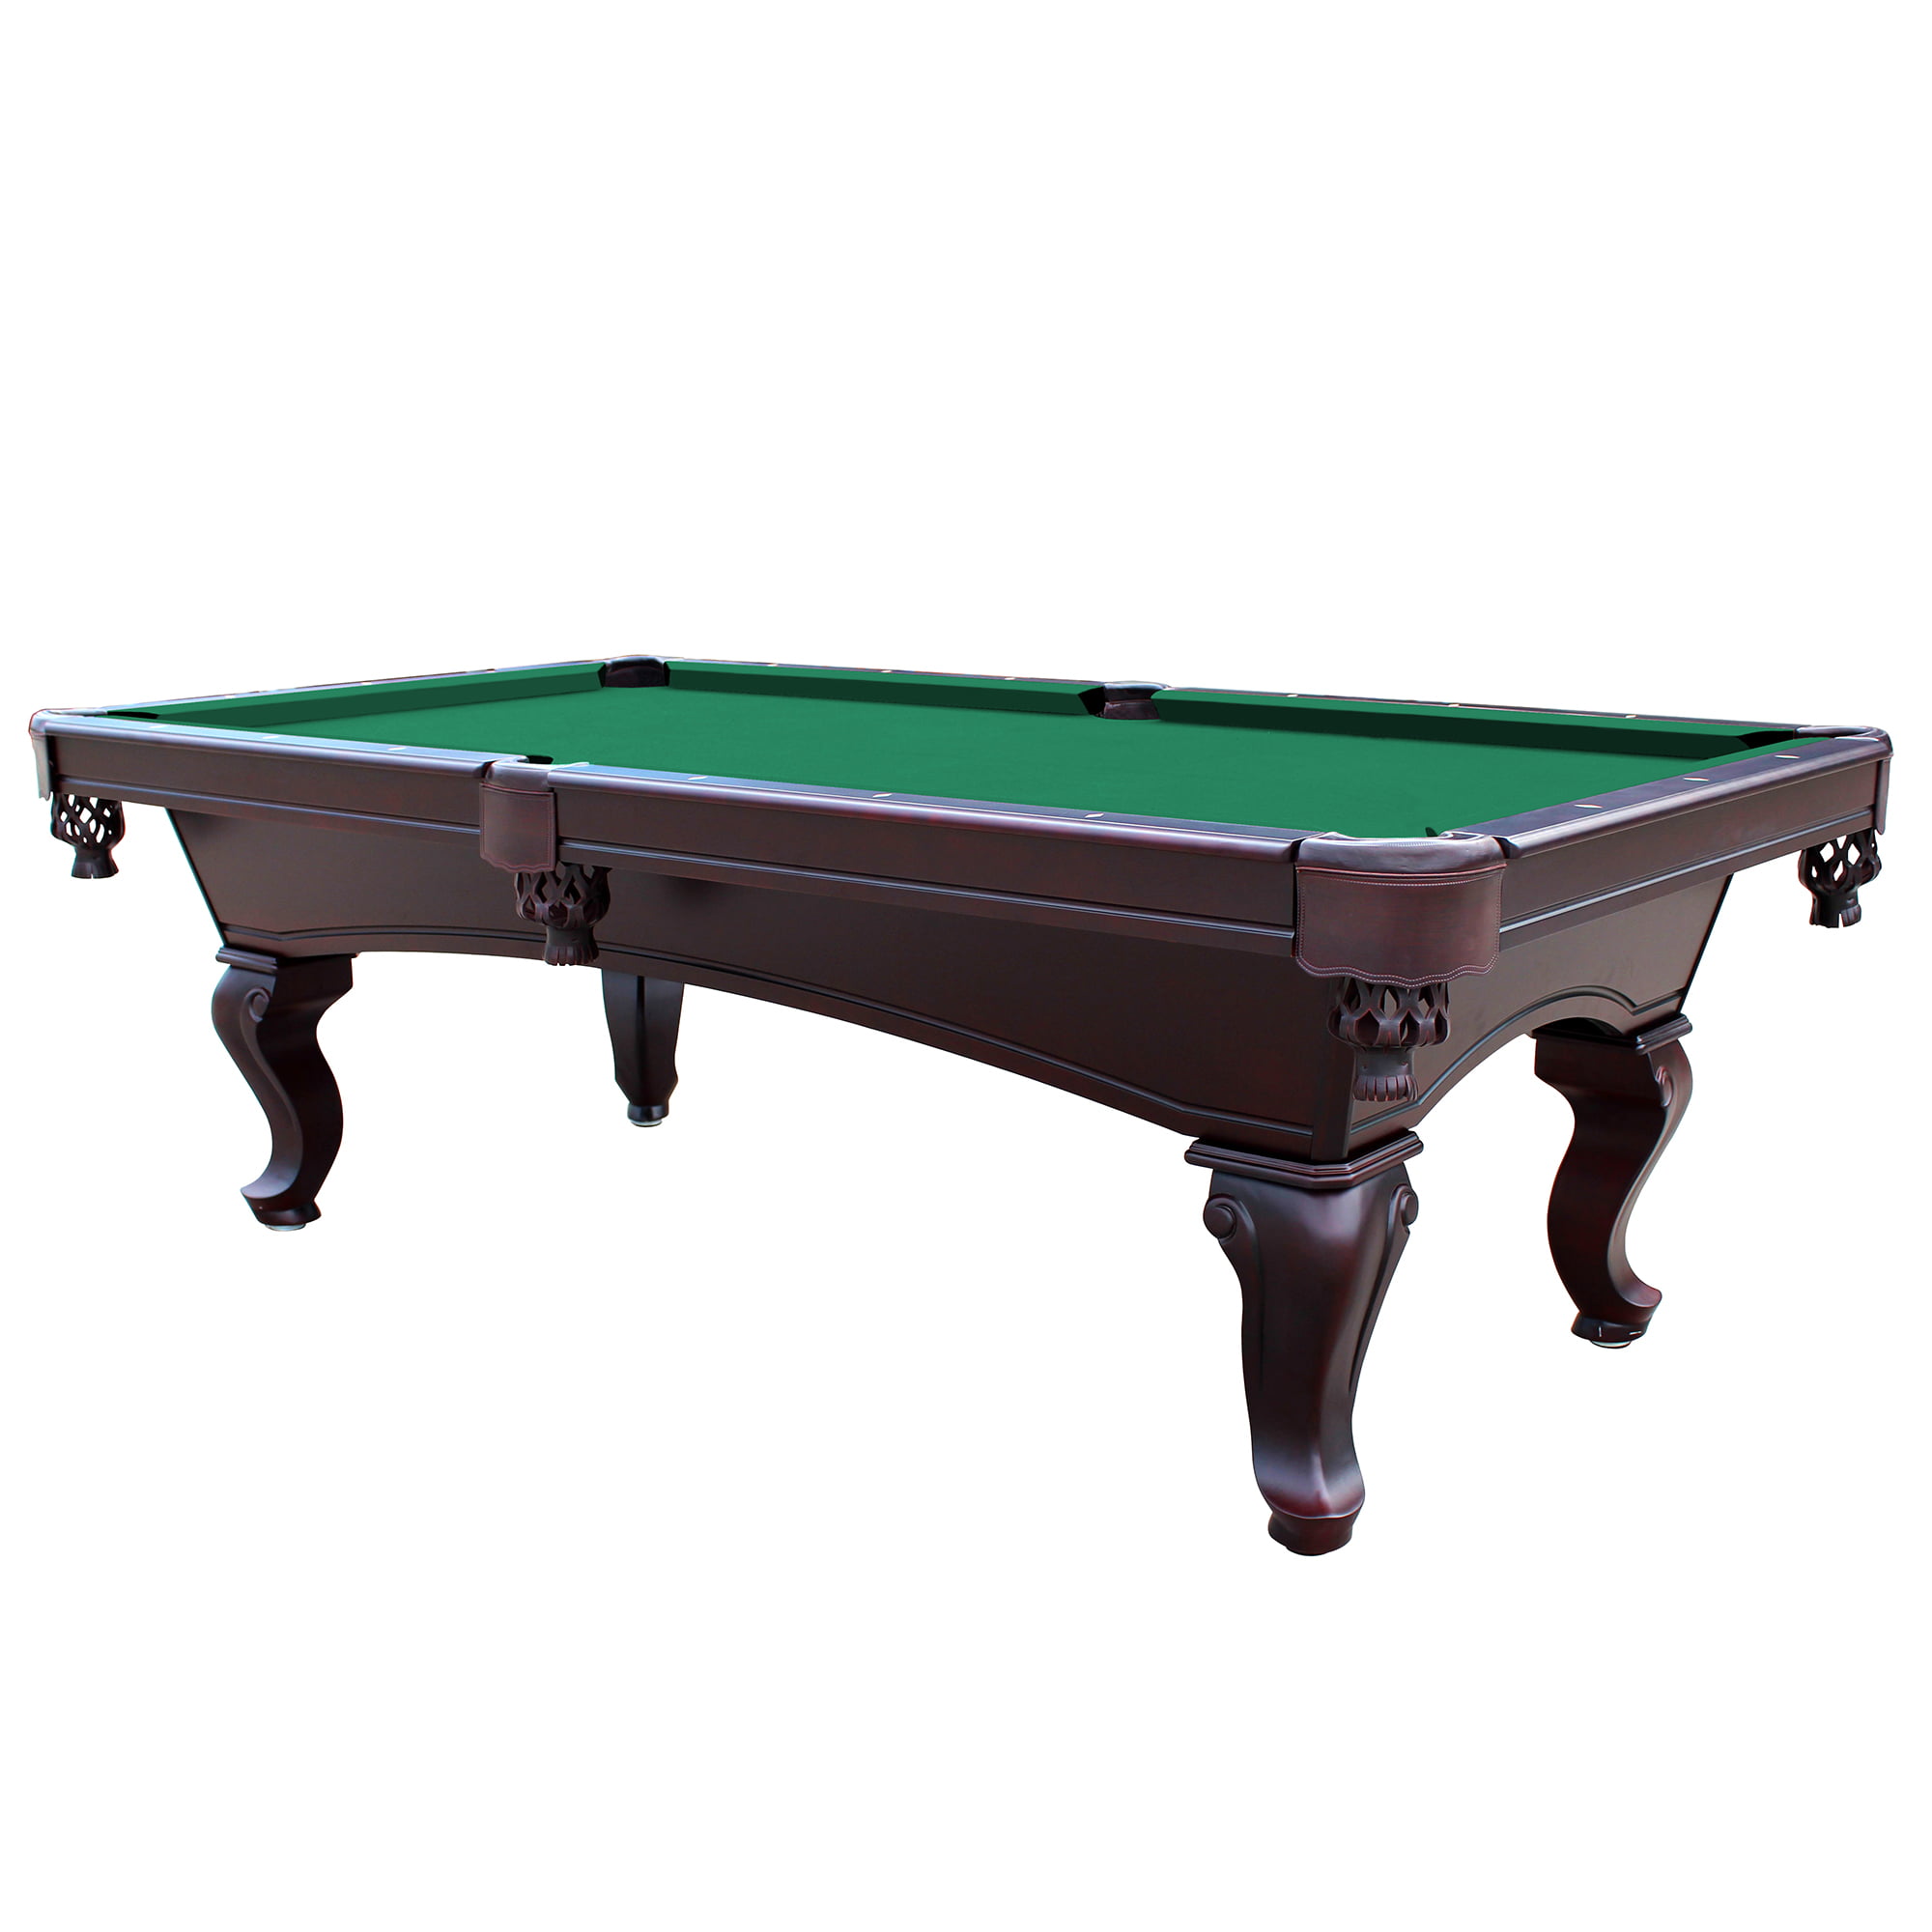 Amusingtao Billiard Table Felt Pool Cloth Snooker Indoor Sports Game Table Cloth with 6 Cushion Cloth Strip for 7//8//9 Foot Billiard Pool